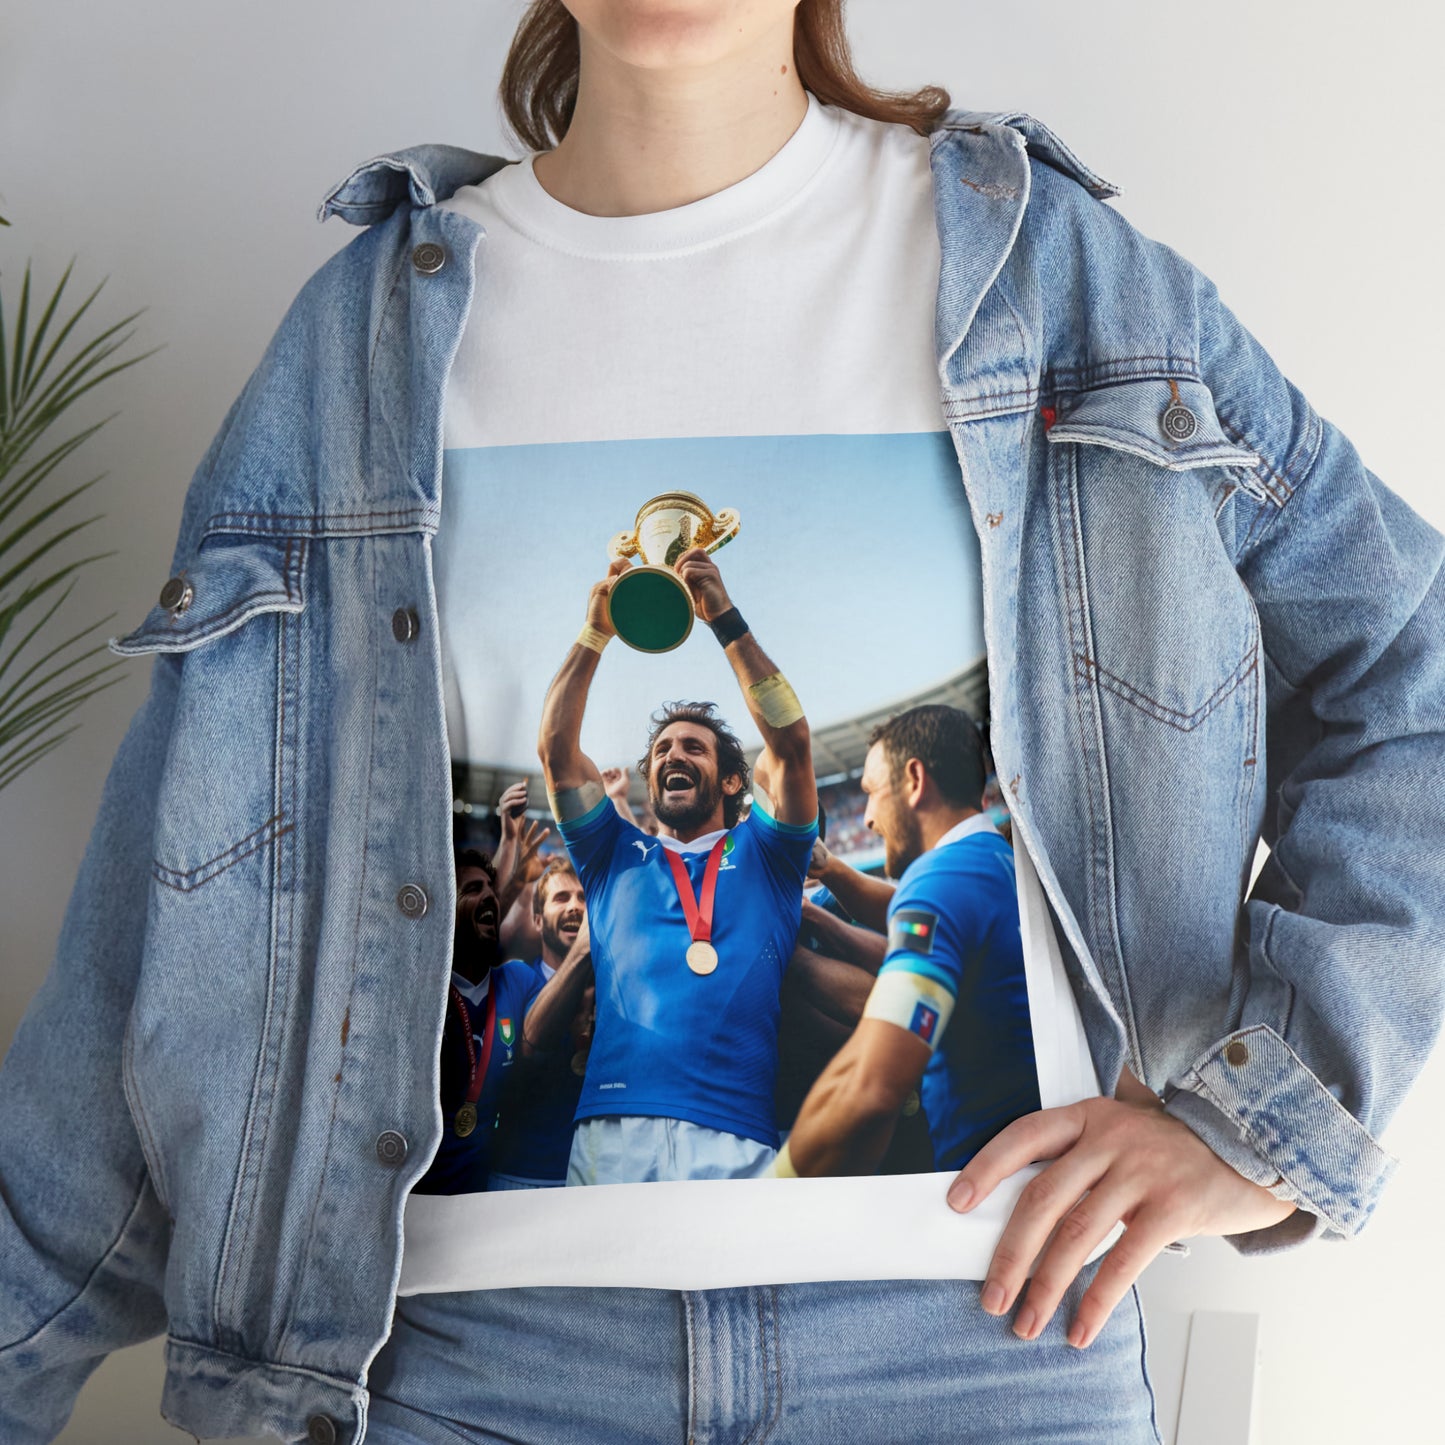 Italy Lifting the RWC - light shirts